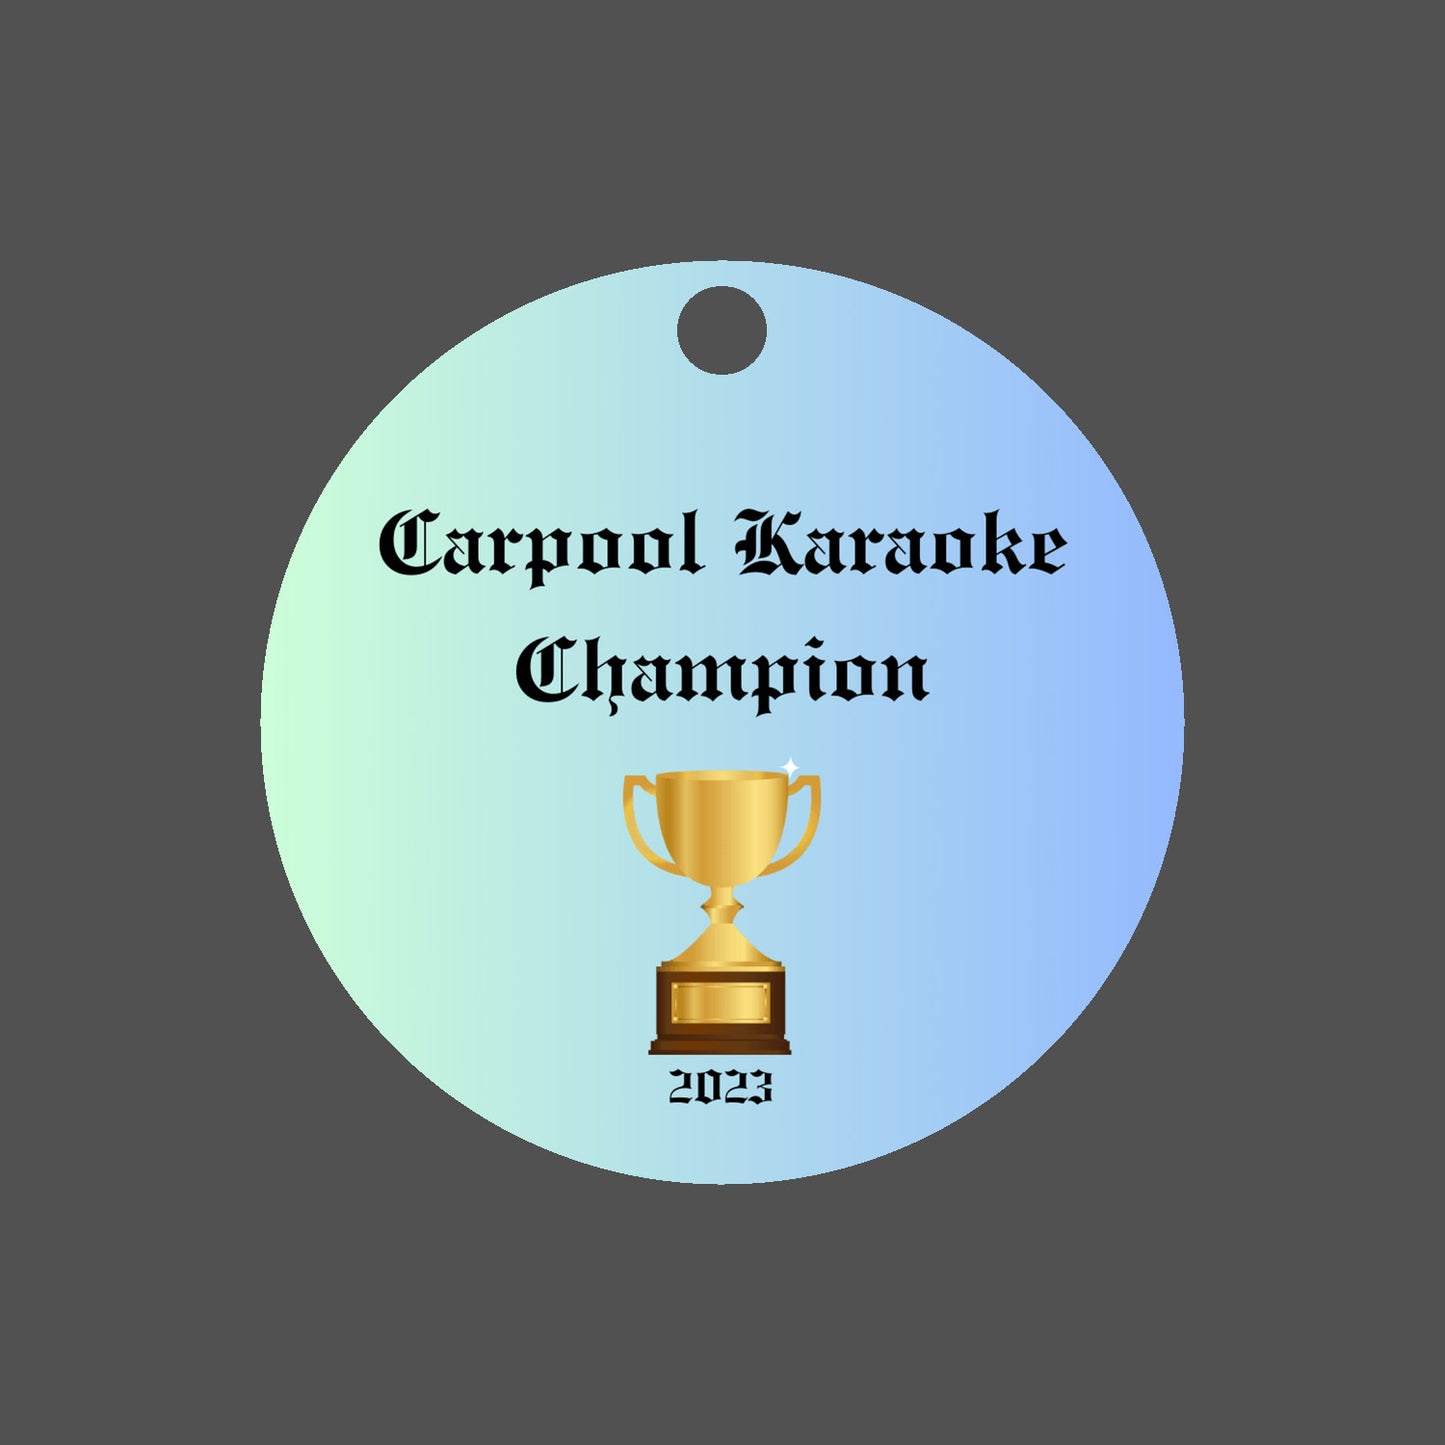 Carpool Karaoke Champion 2023 - Car Ornamate